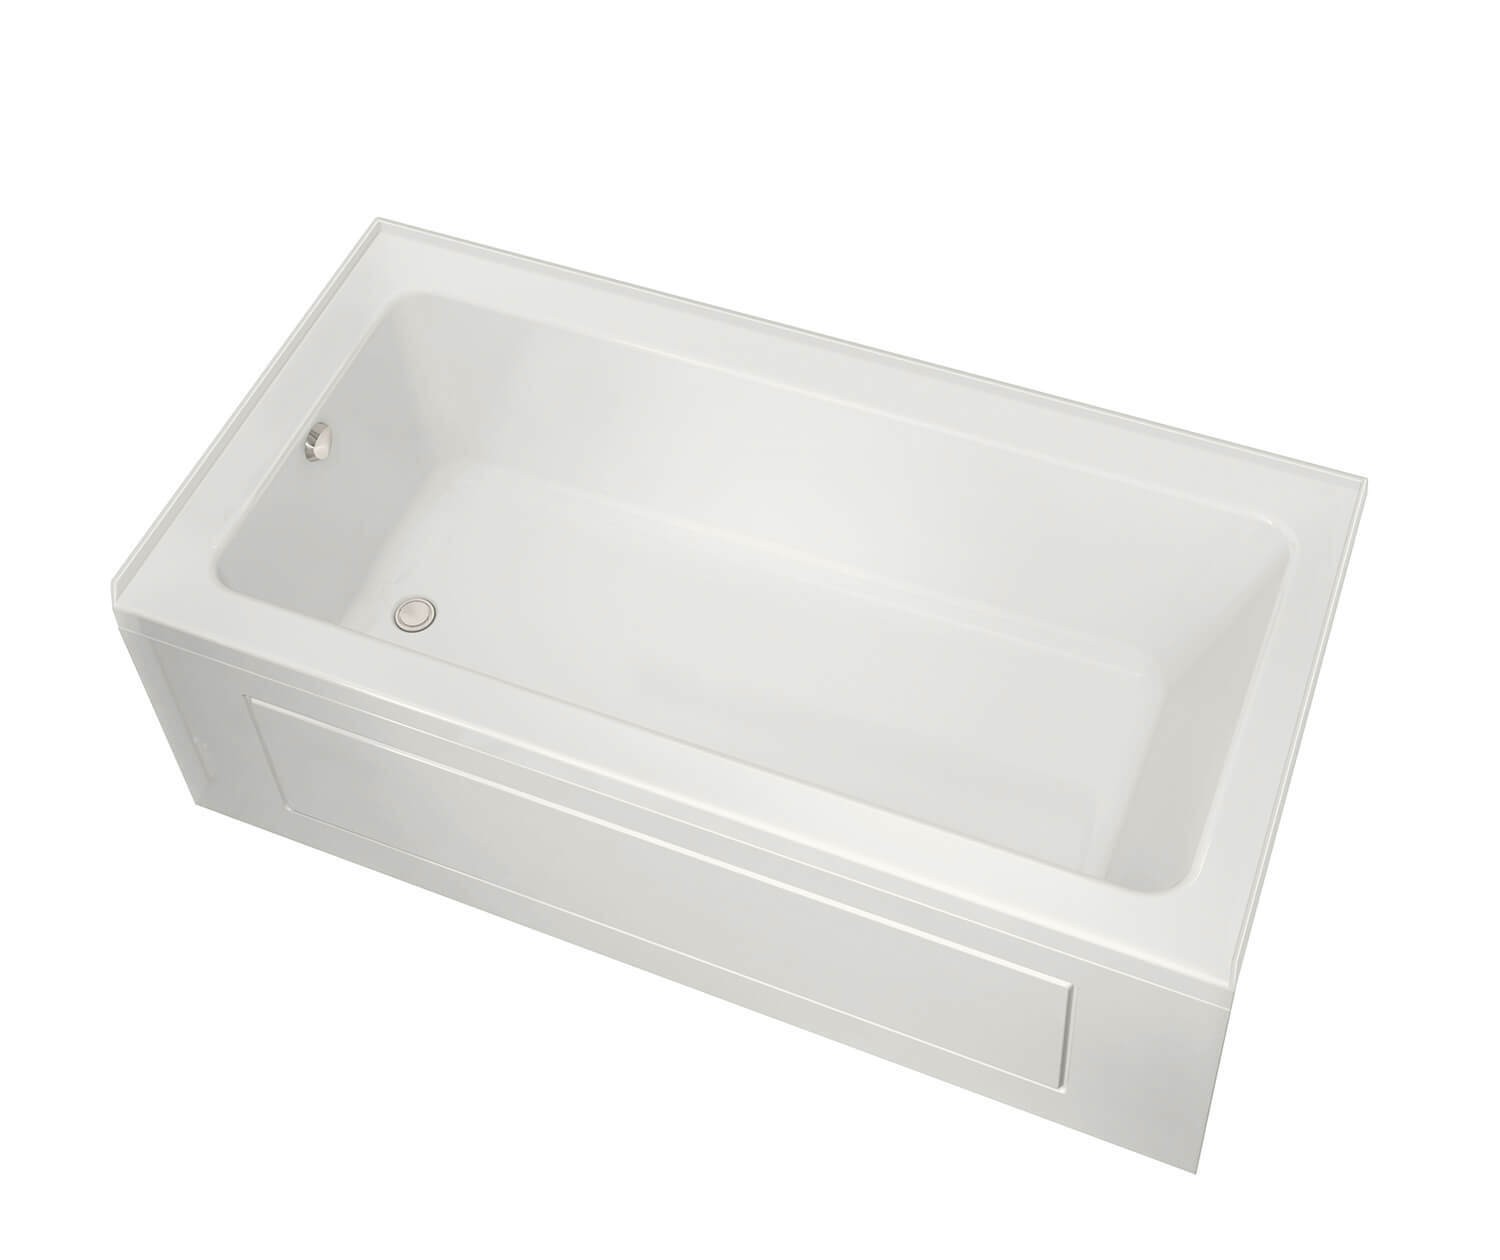 Maax 106210-R-000-001 Alcove Bathtub with Right Drain in White